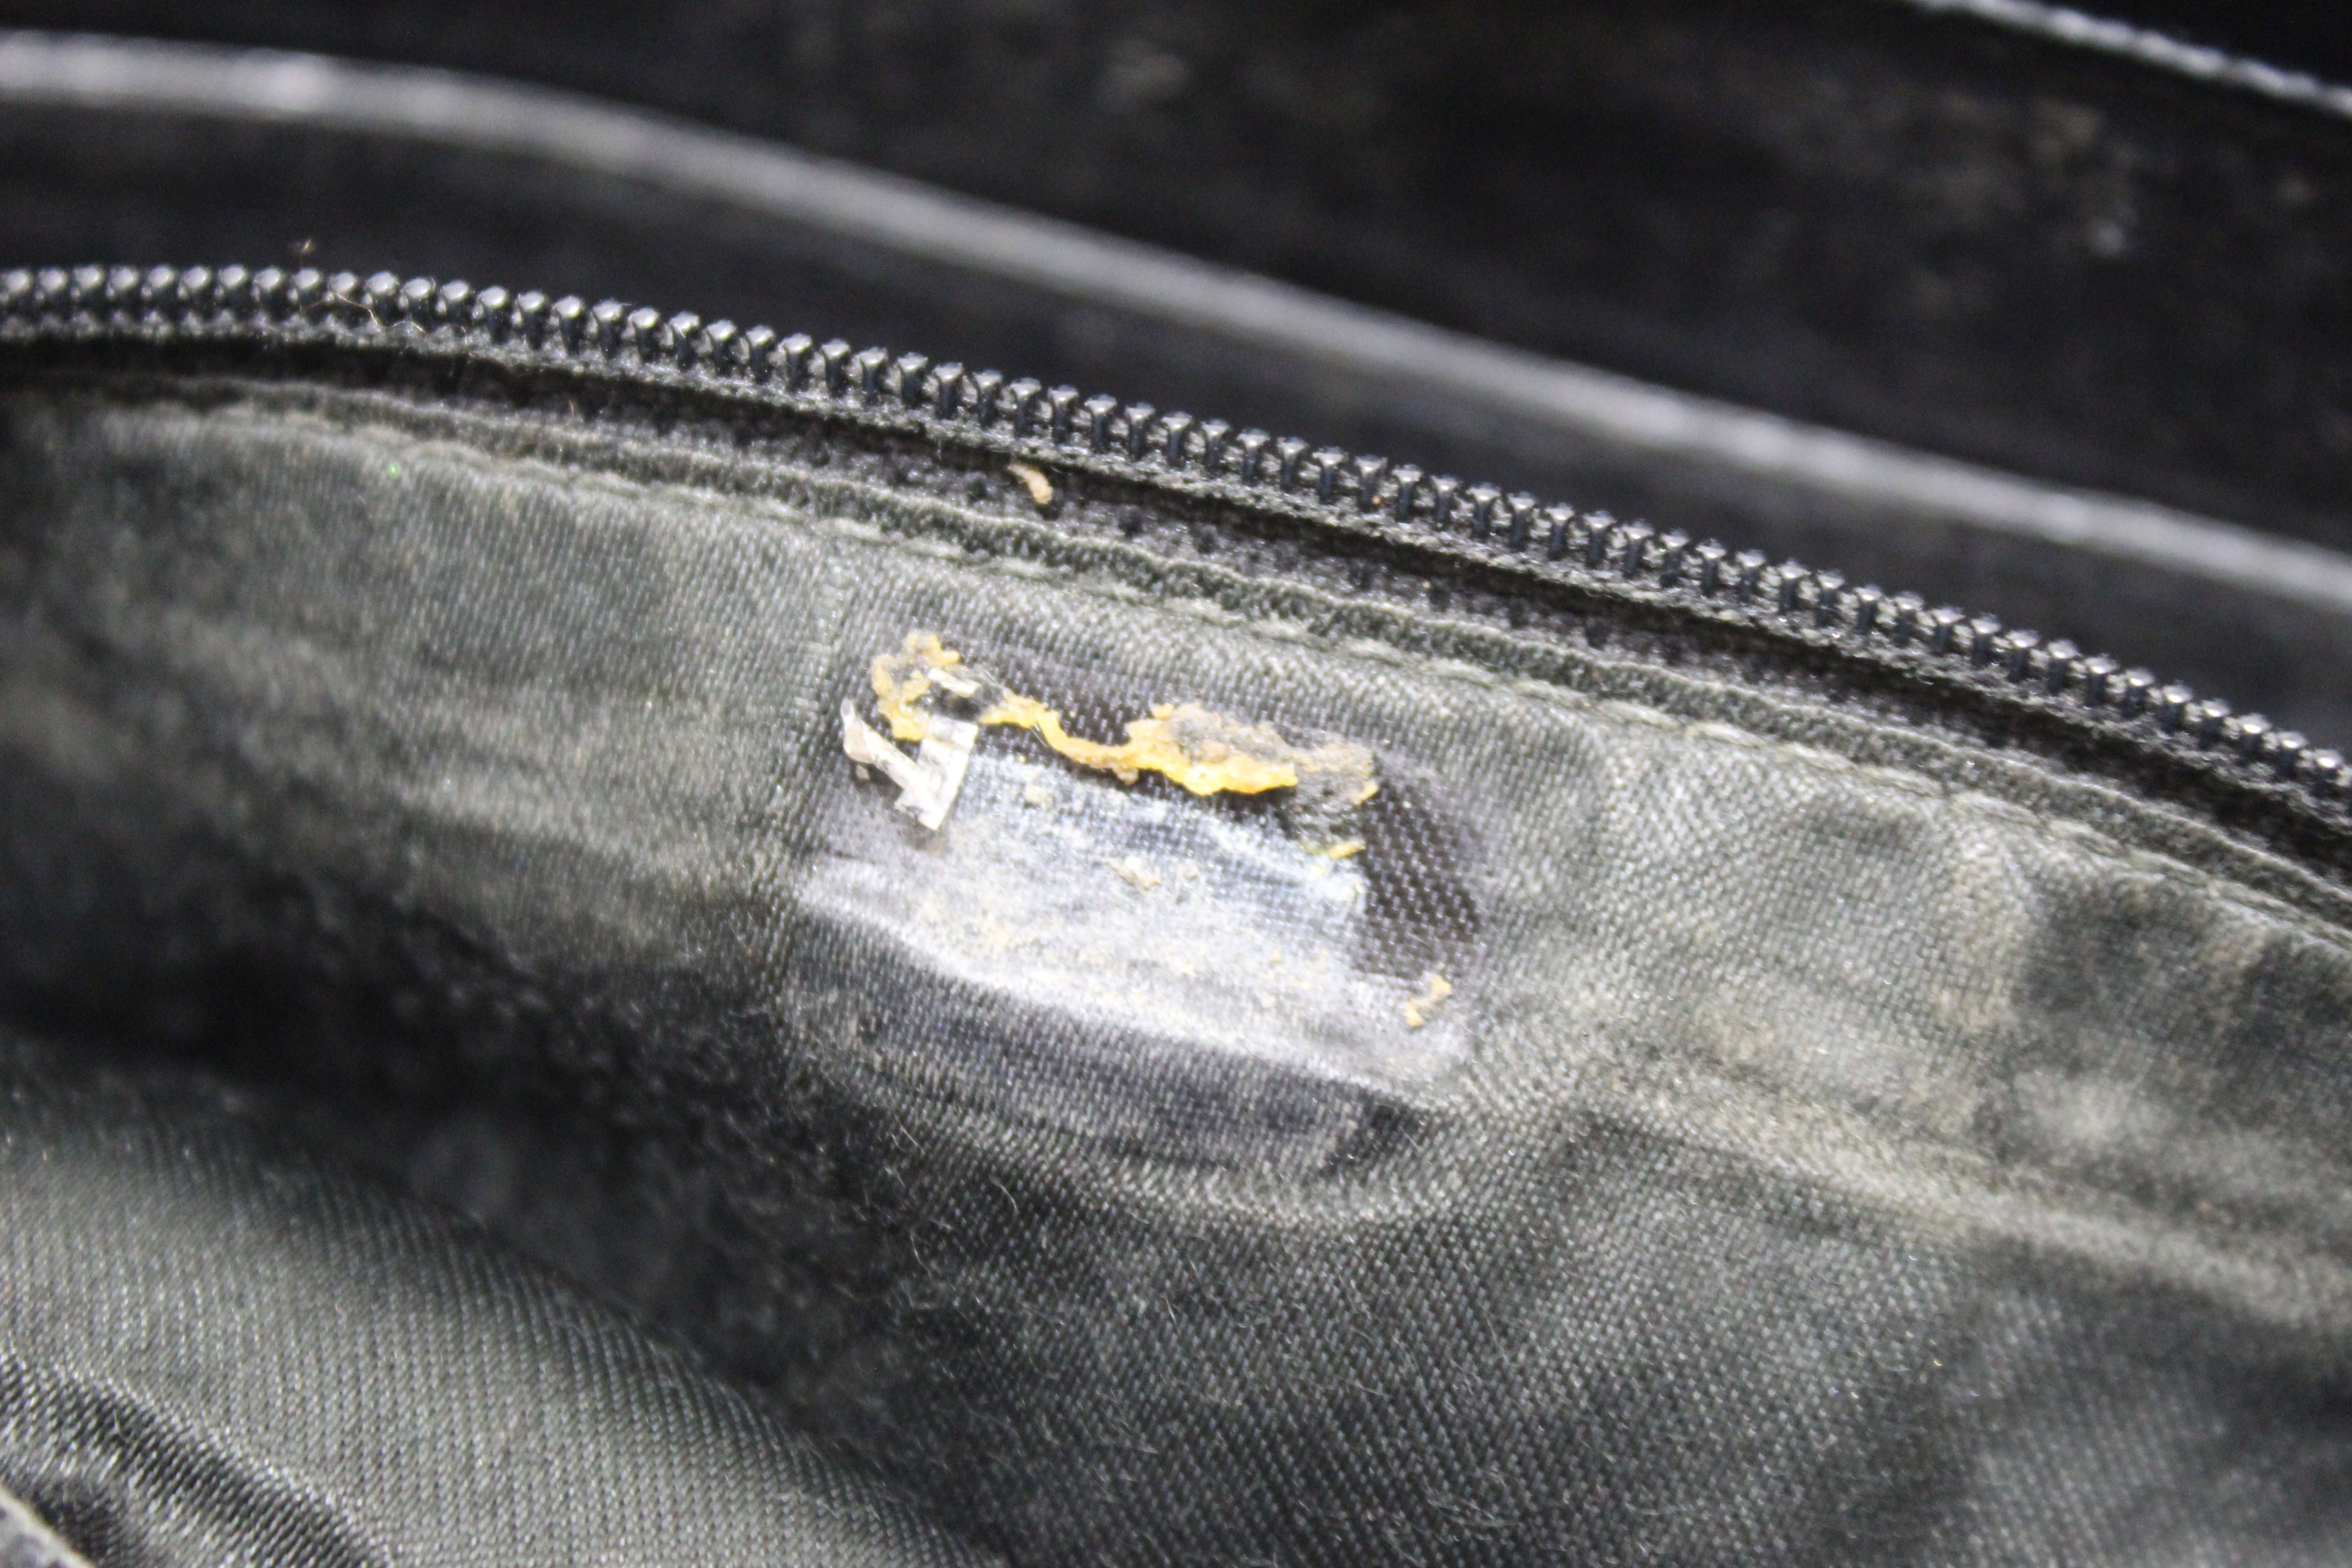 Authentic Chanel Black Quilted Patent Leather CC Twist Flap Shoulder Bag